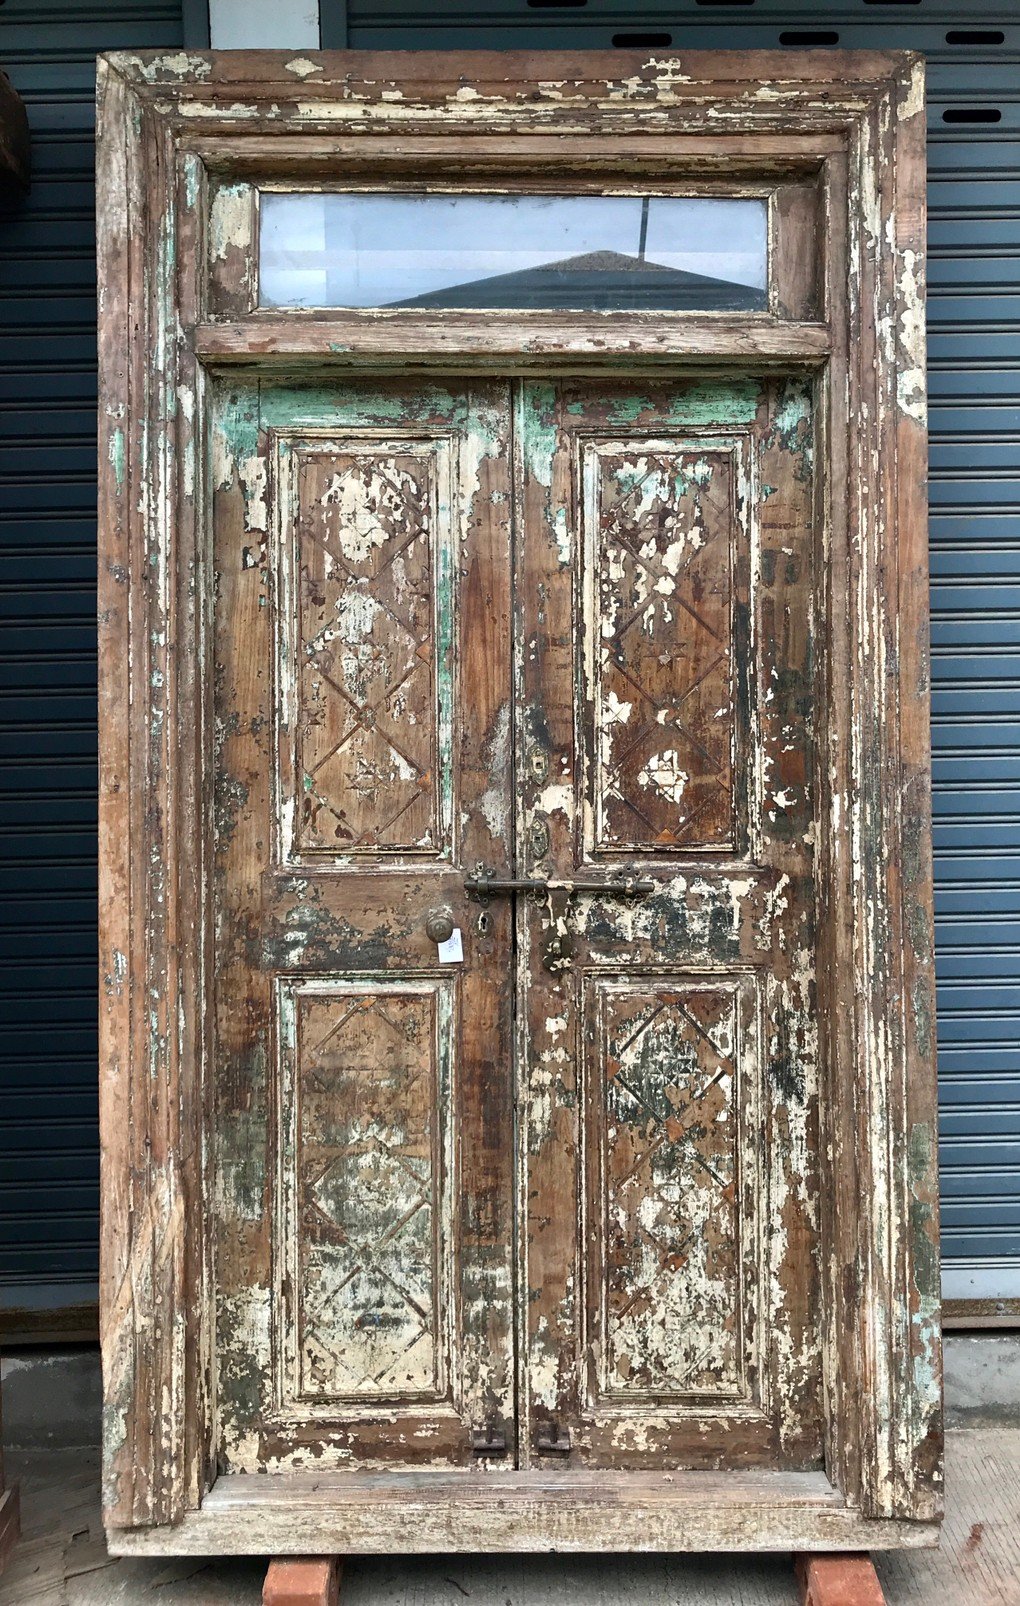 XL11 ประตูไม้สักแบบอังกฤษพื้นผิวสีเก่าขัดหยาบ